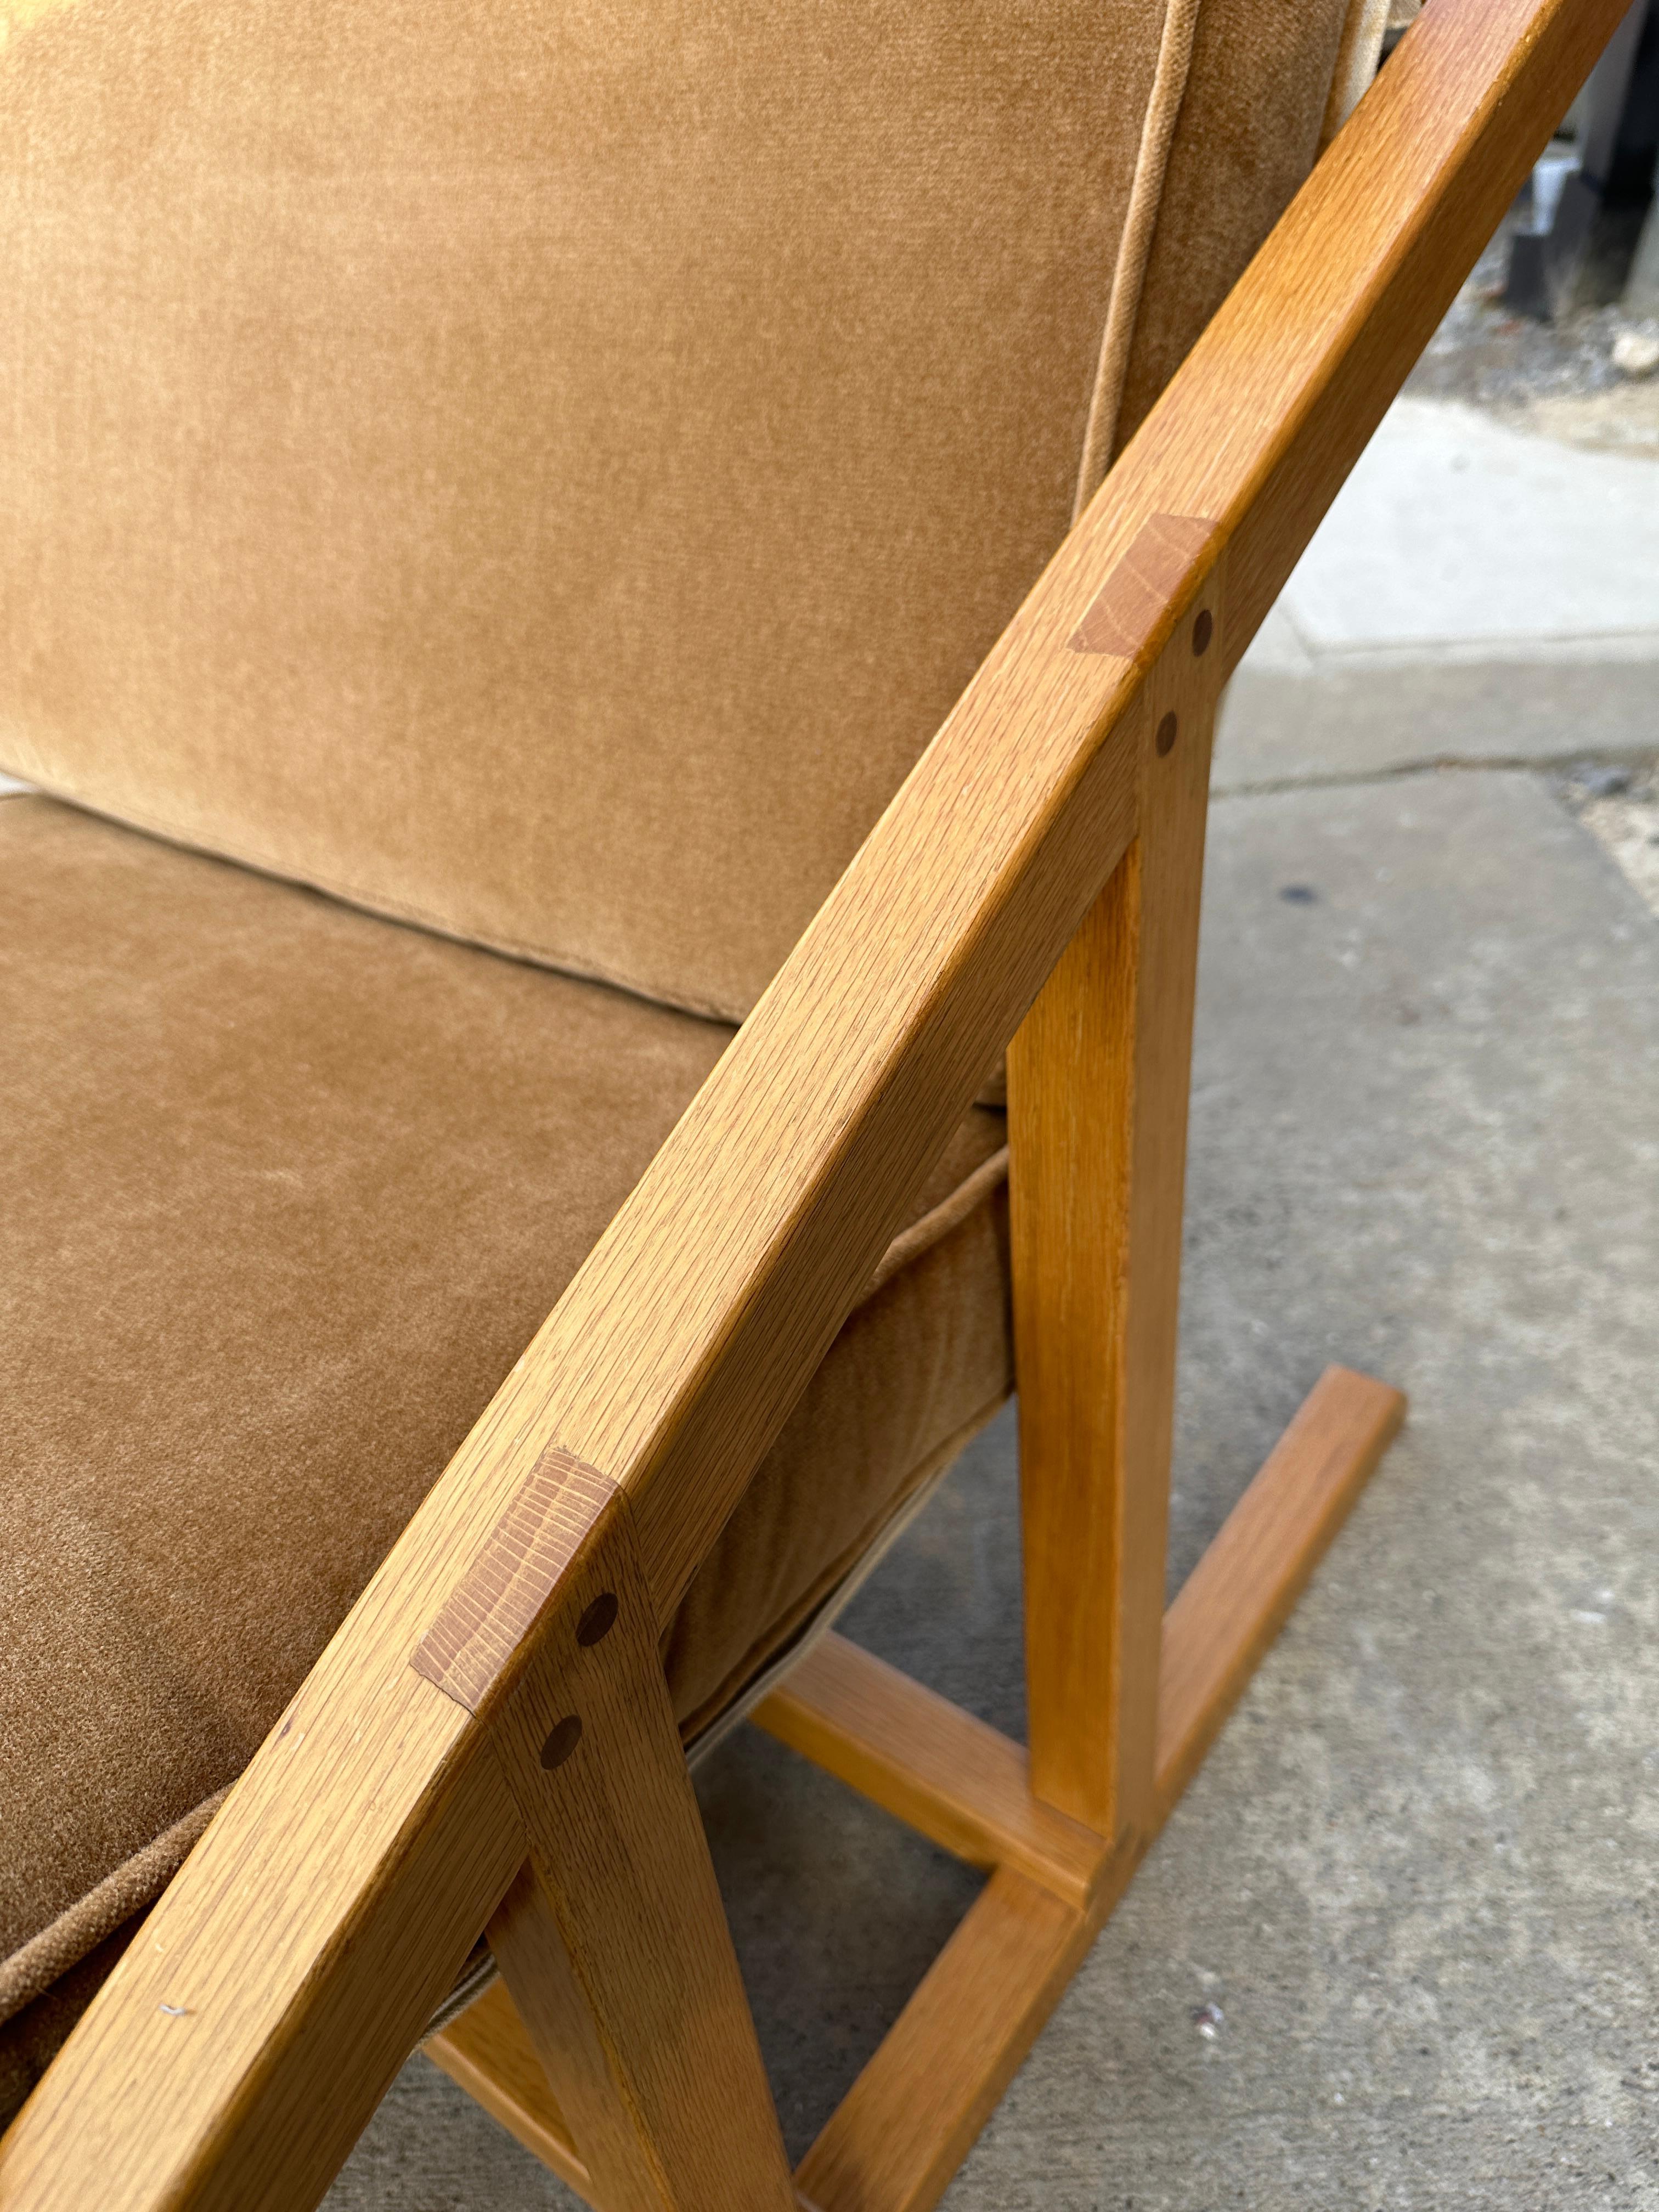 Midcentury White Oak Sling Chair with Velvet Cushions For Sale 2